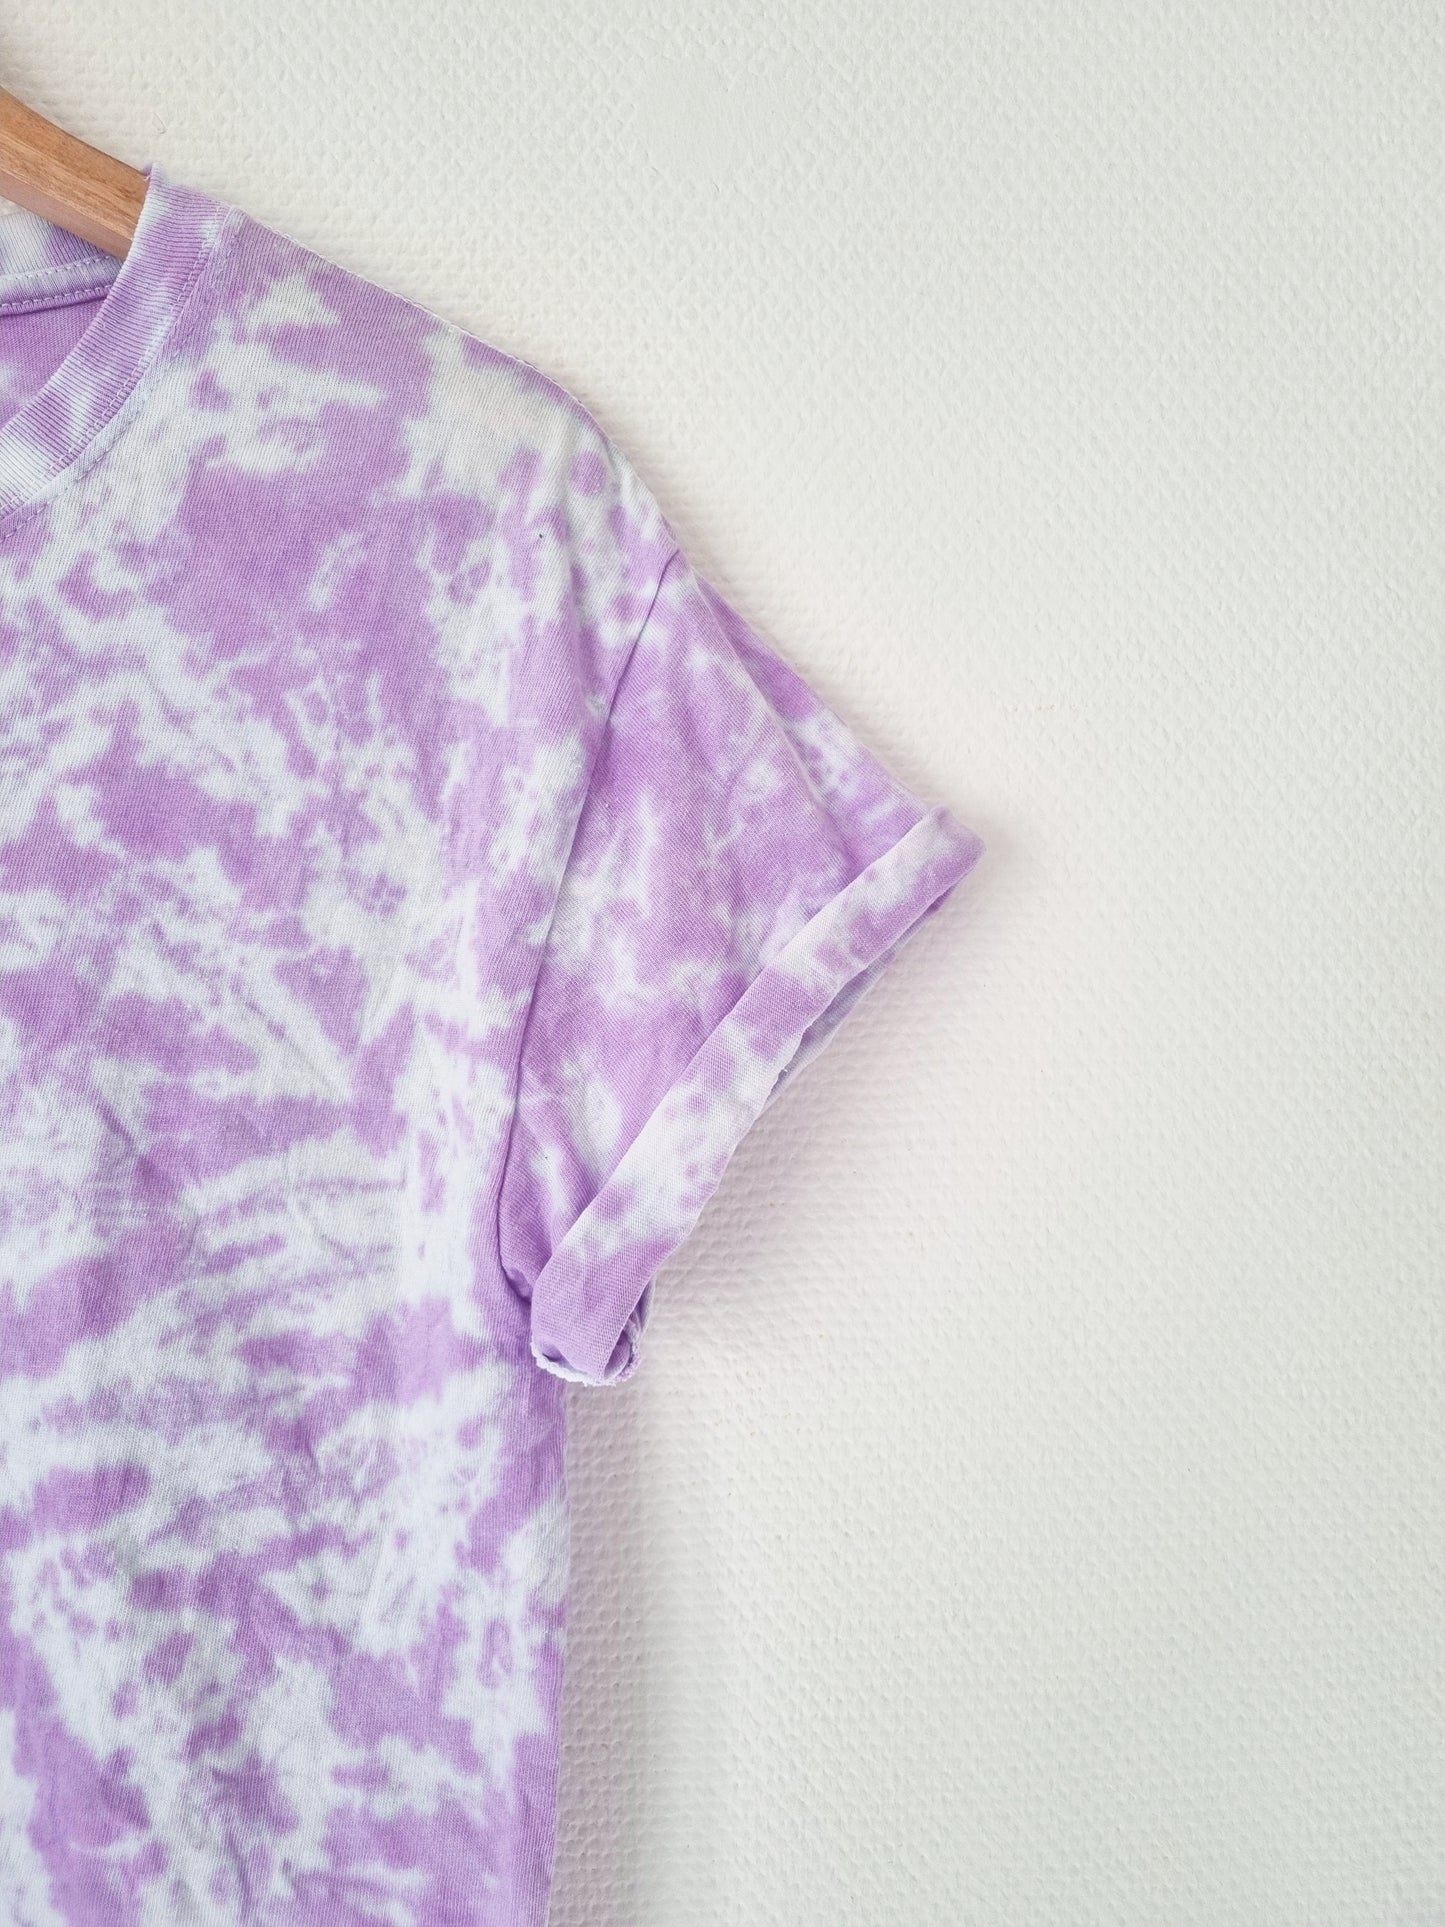 Hand Designed Pastel Purple Galaxy Tie-Dye Shirt